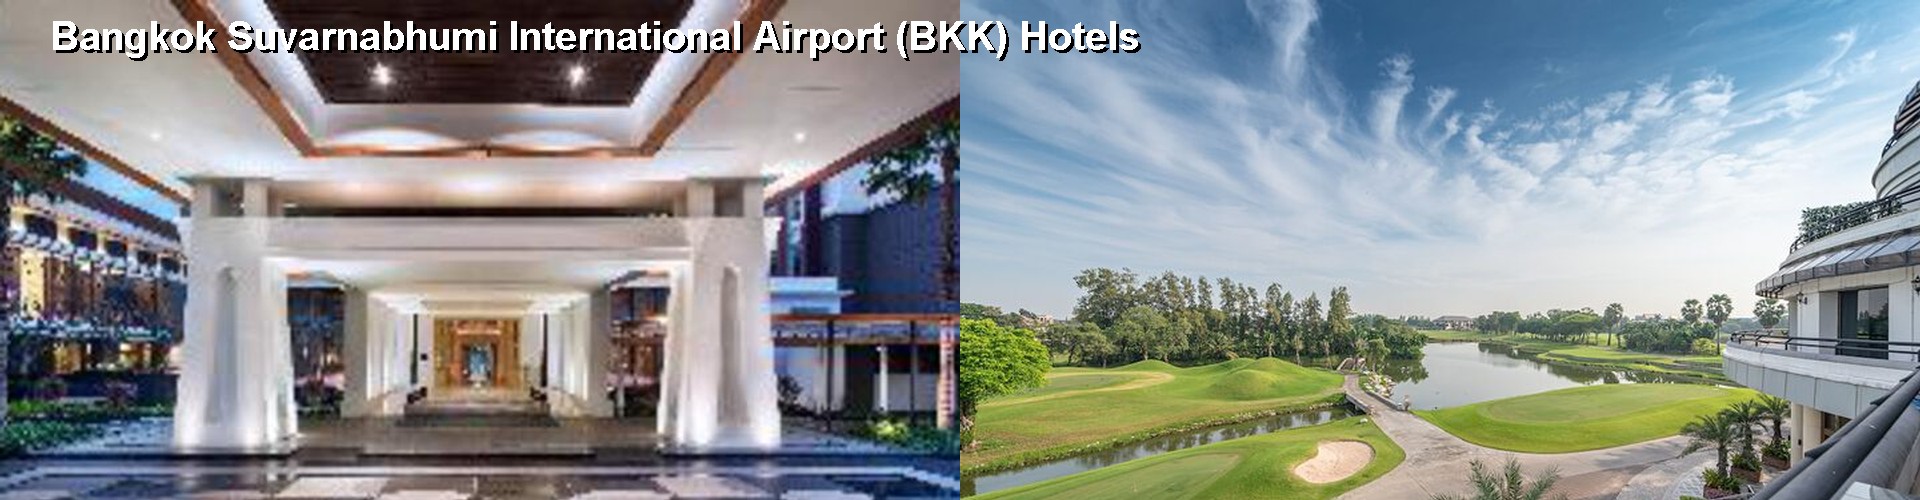 5 Best Hotels near Bangkok Suvarnabhumi International Airport (BKK)